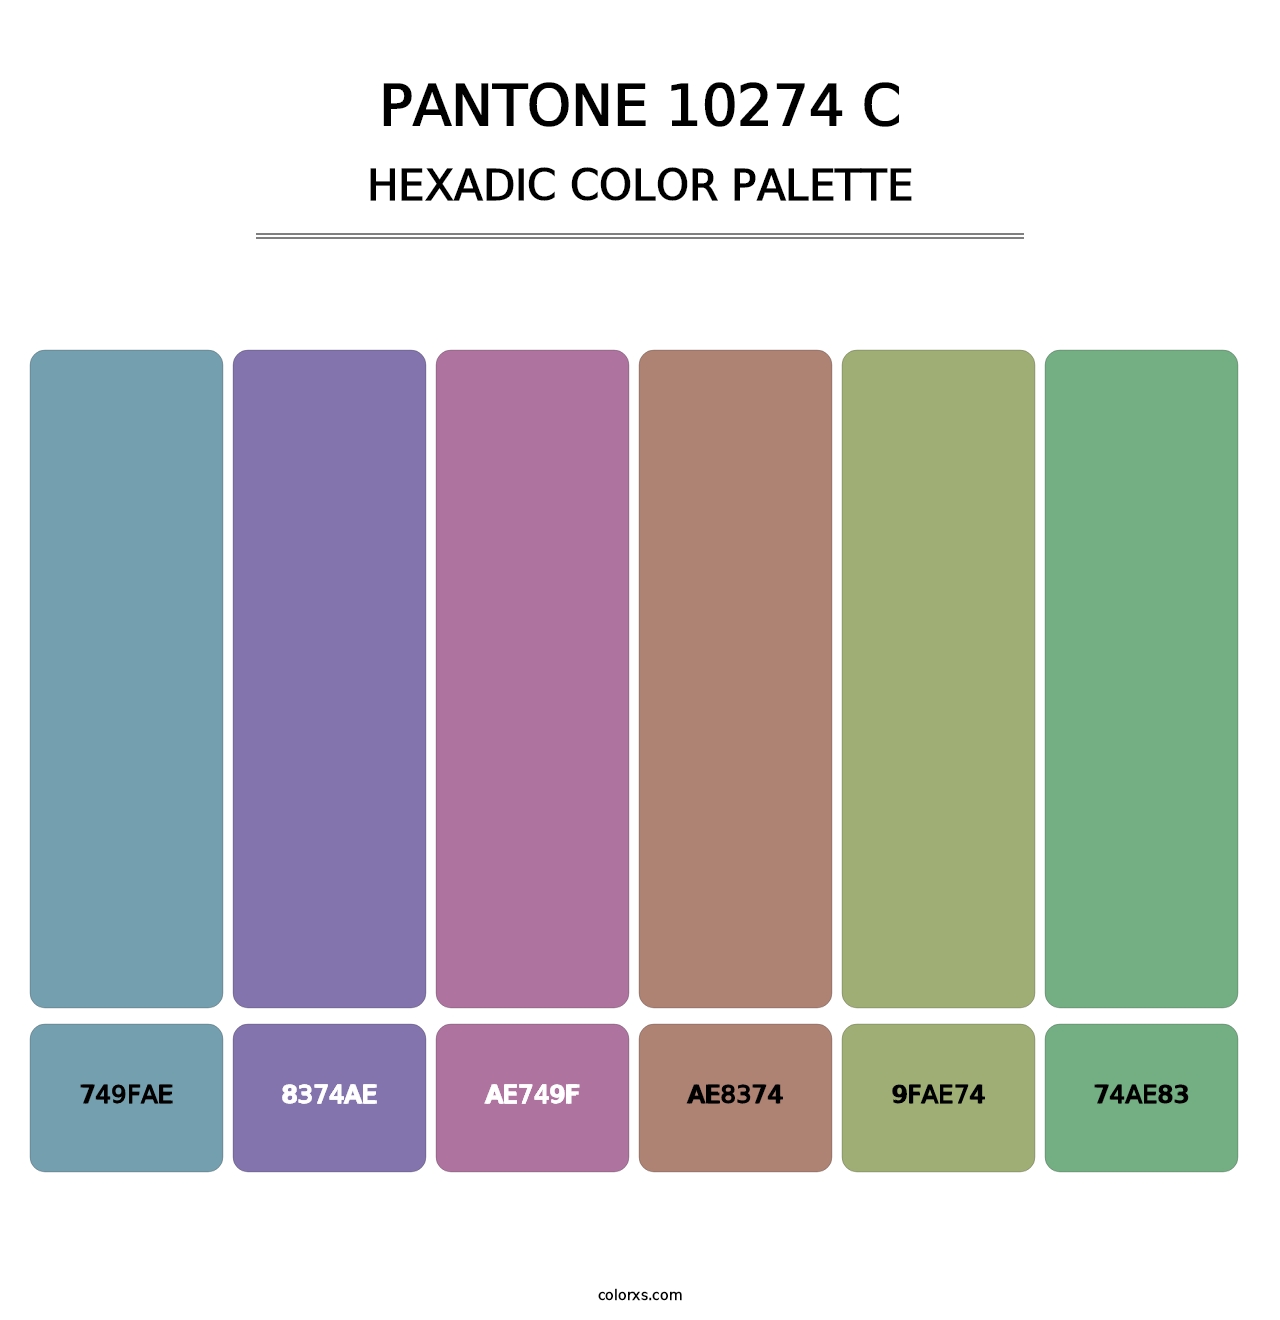 PANTONE 10274 C - Hexadic Color Palette